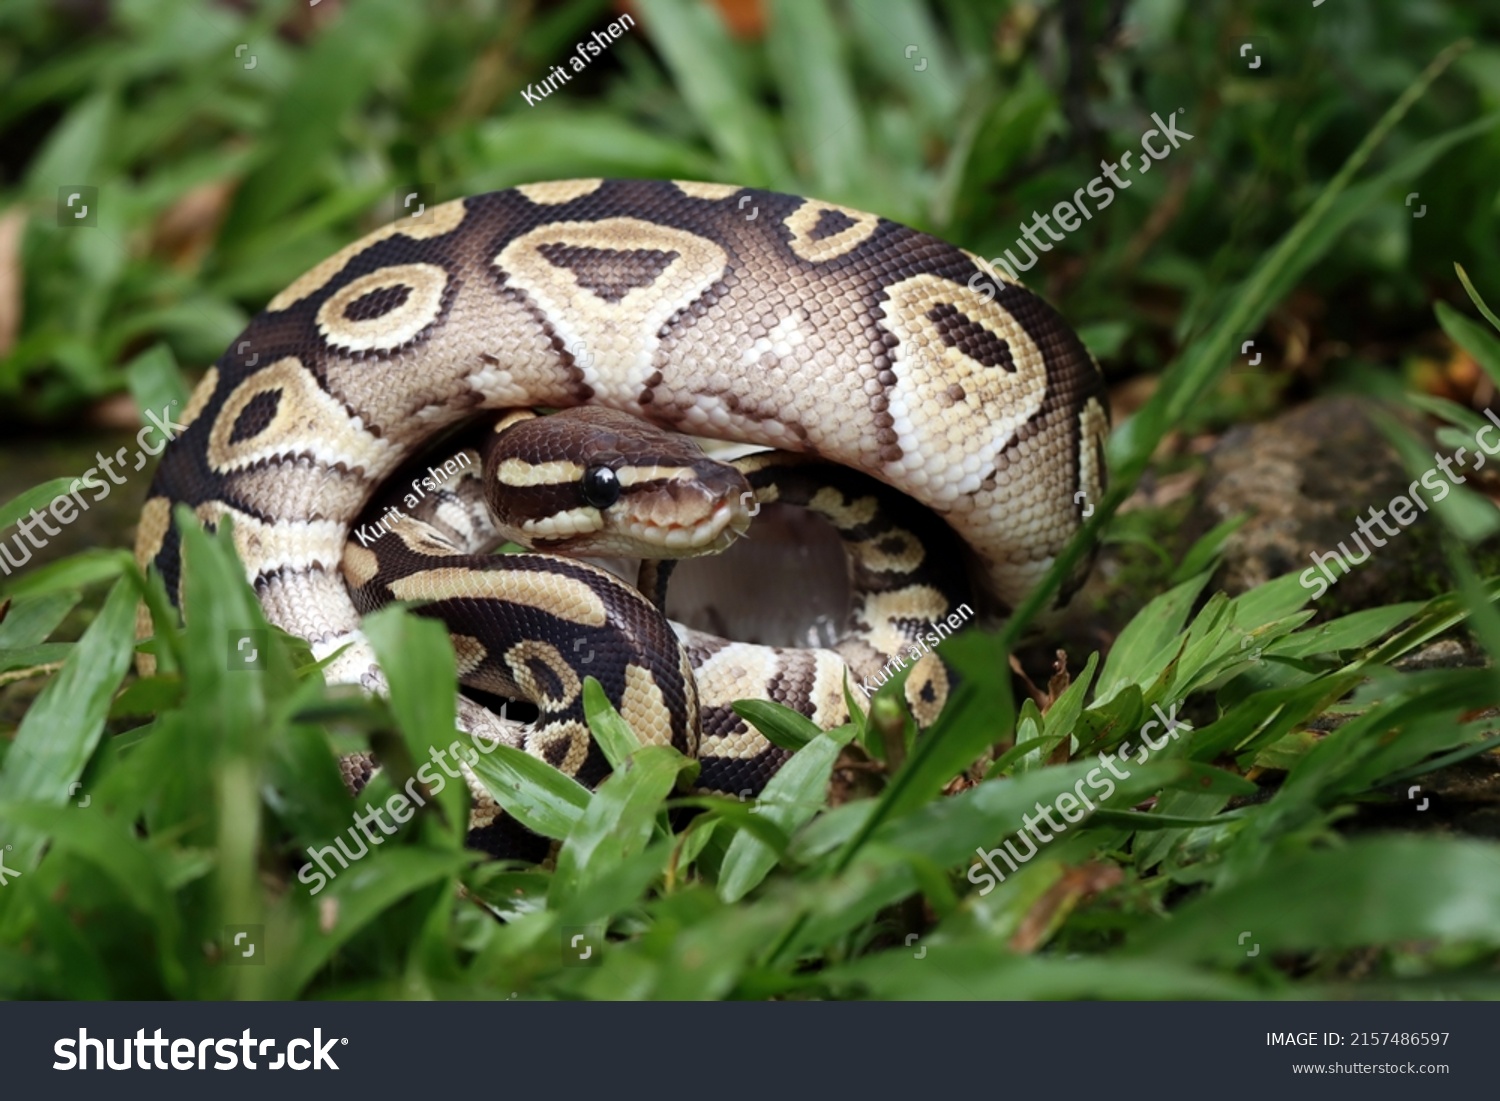 Ball phyton snake closeup on grass, Ball phyton snake closeup skin, Ball phyton snake closeup #2157486597